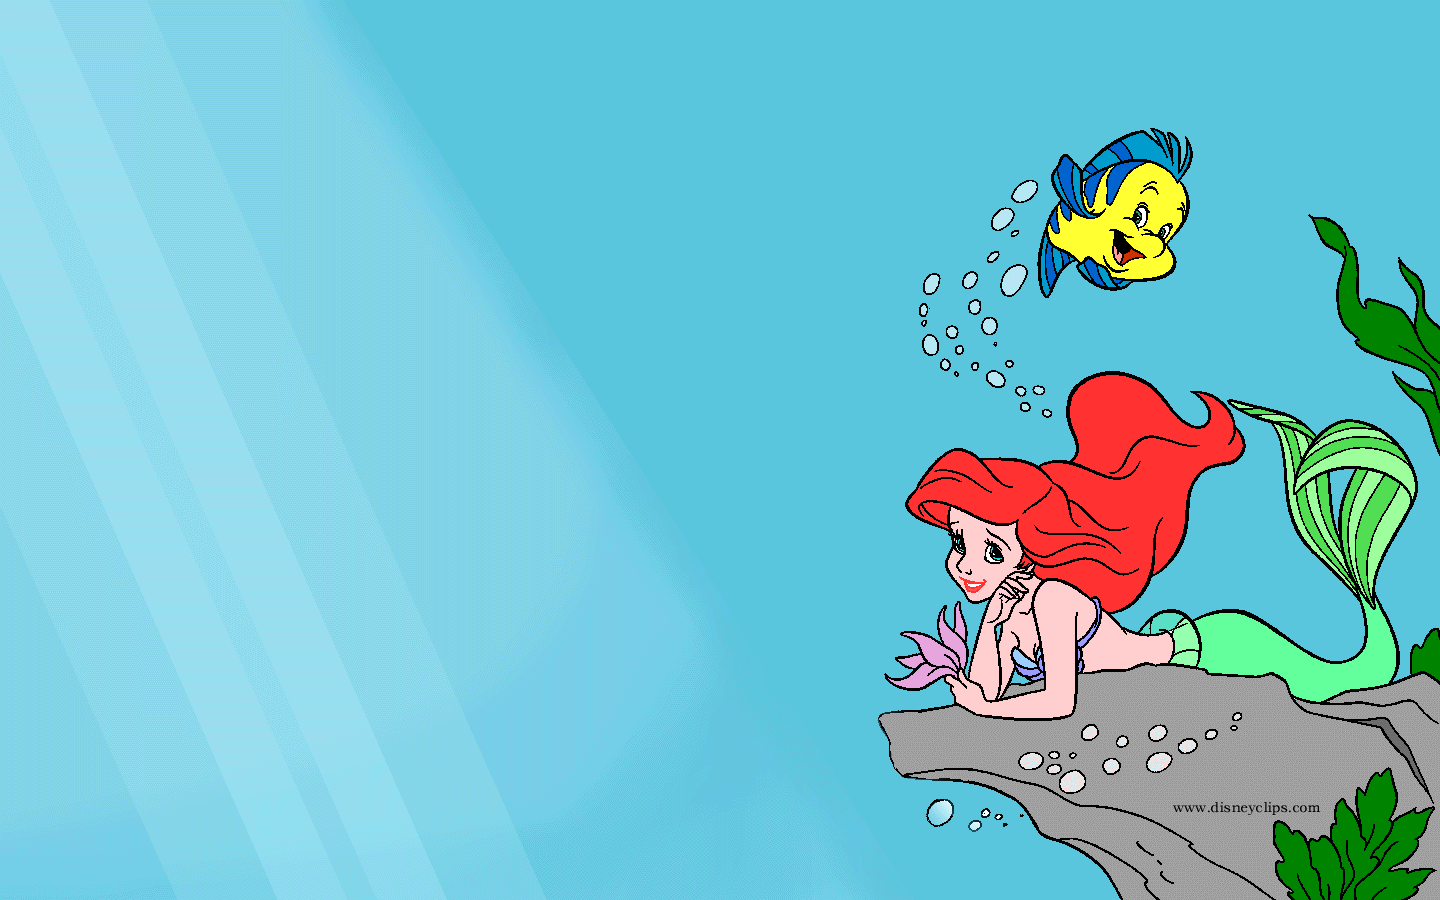 Disney Princess Image The Little Mermaid Wallpaper Photos